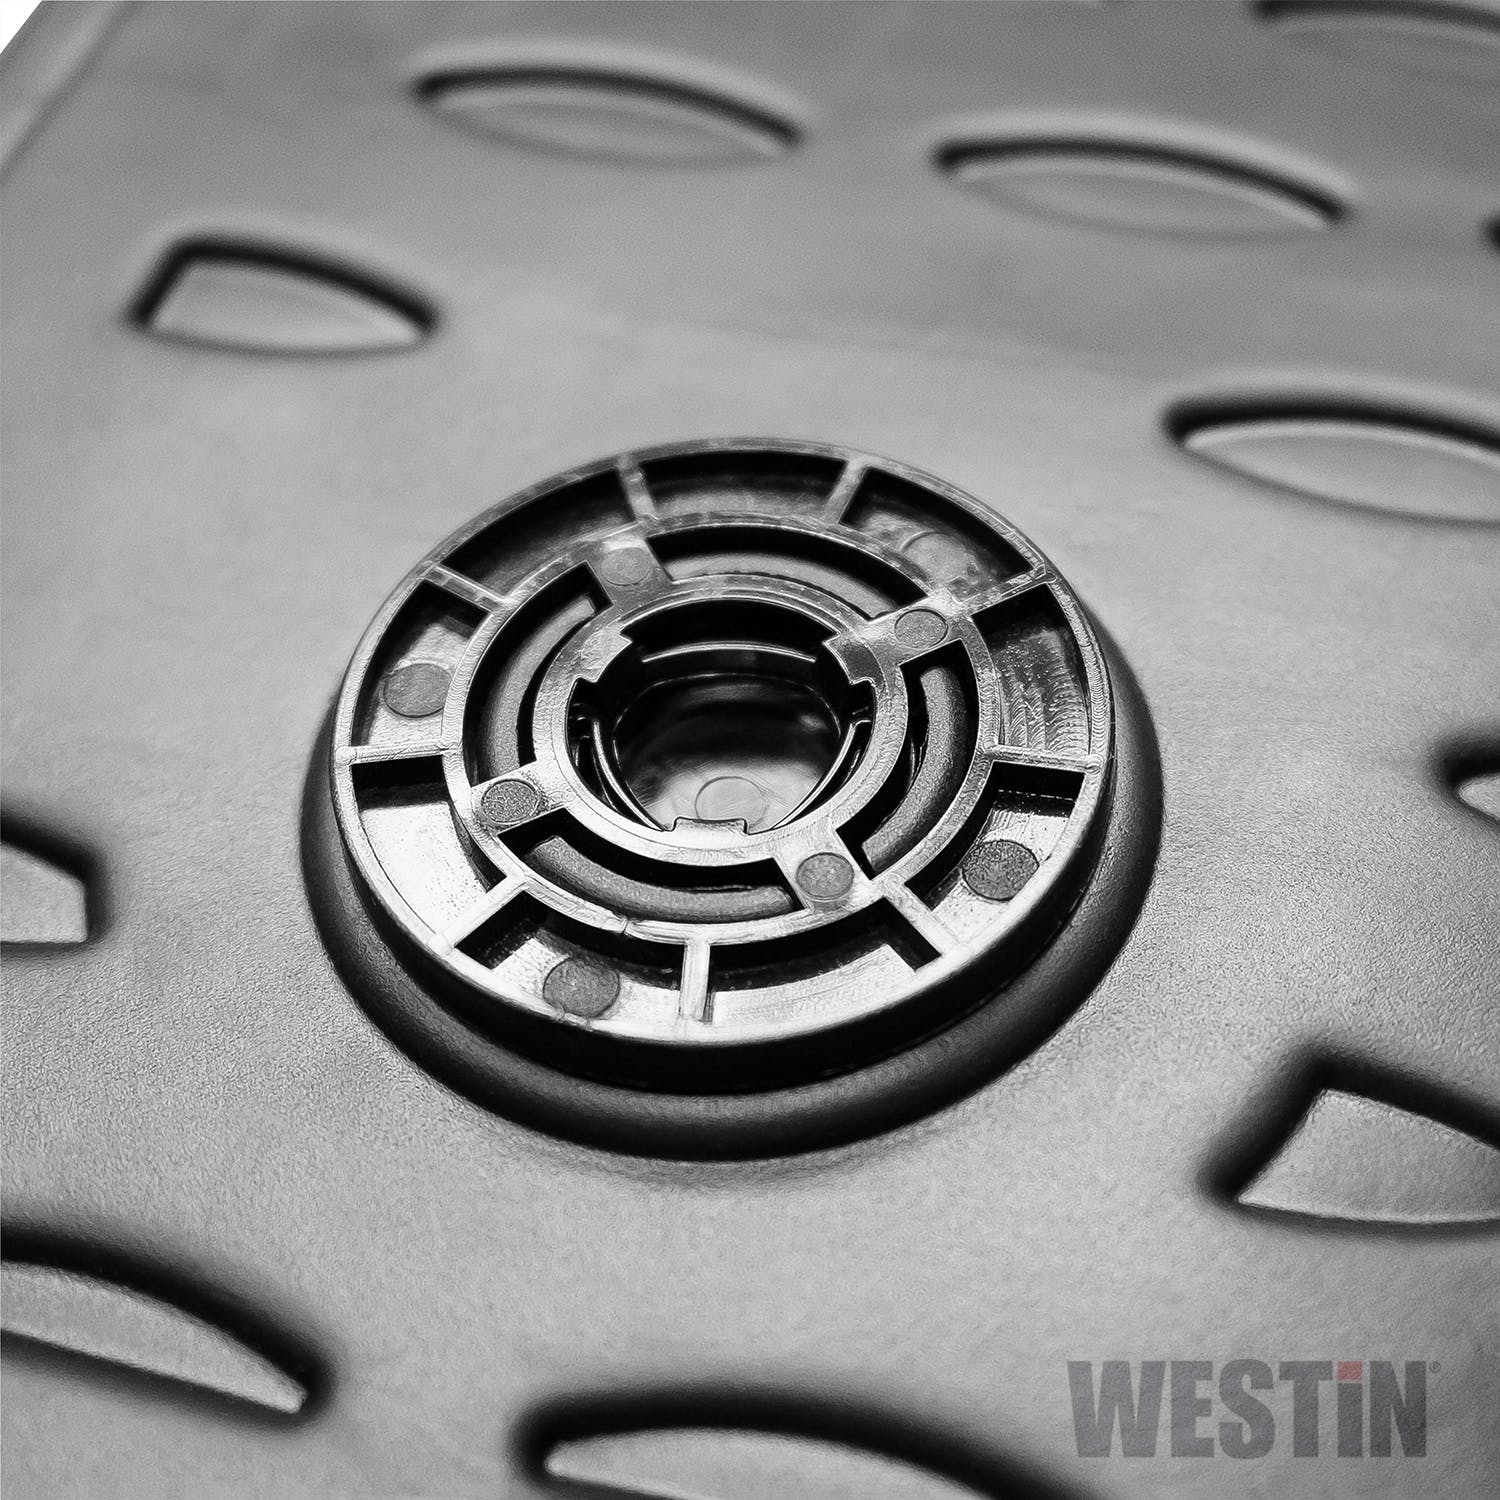 Westin Automotive 74-29-21011 Profile Floor Liners Front Row Black